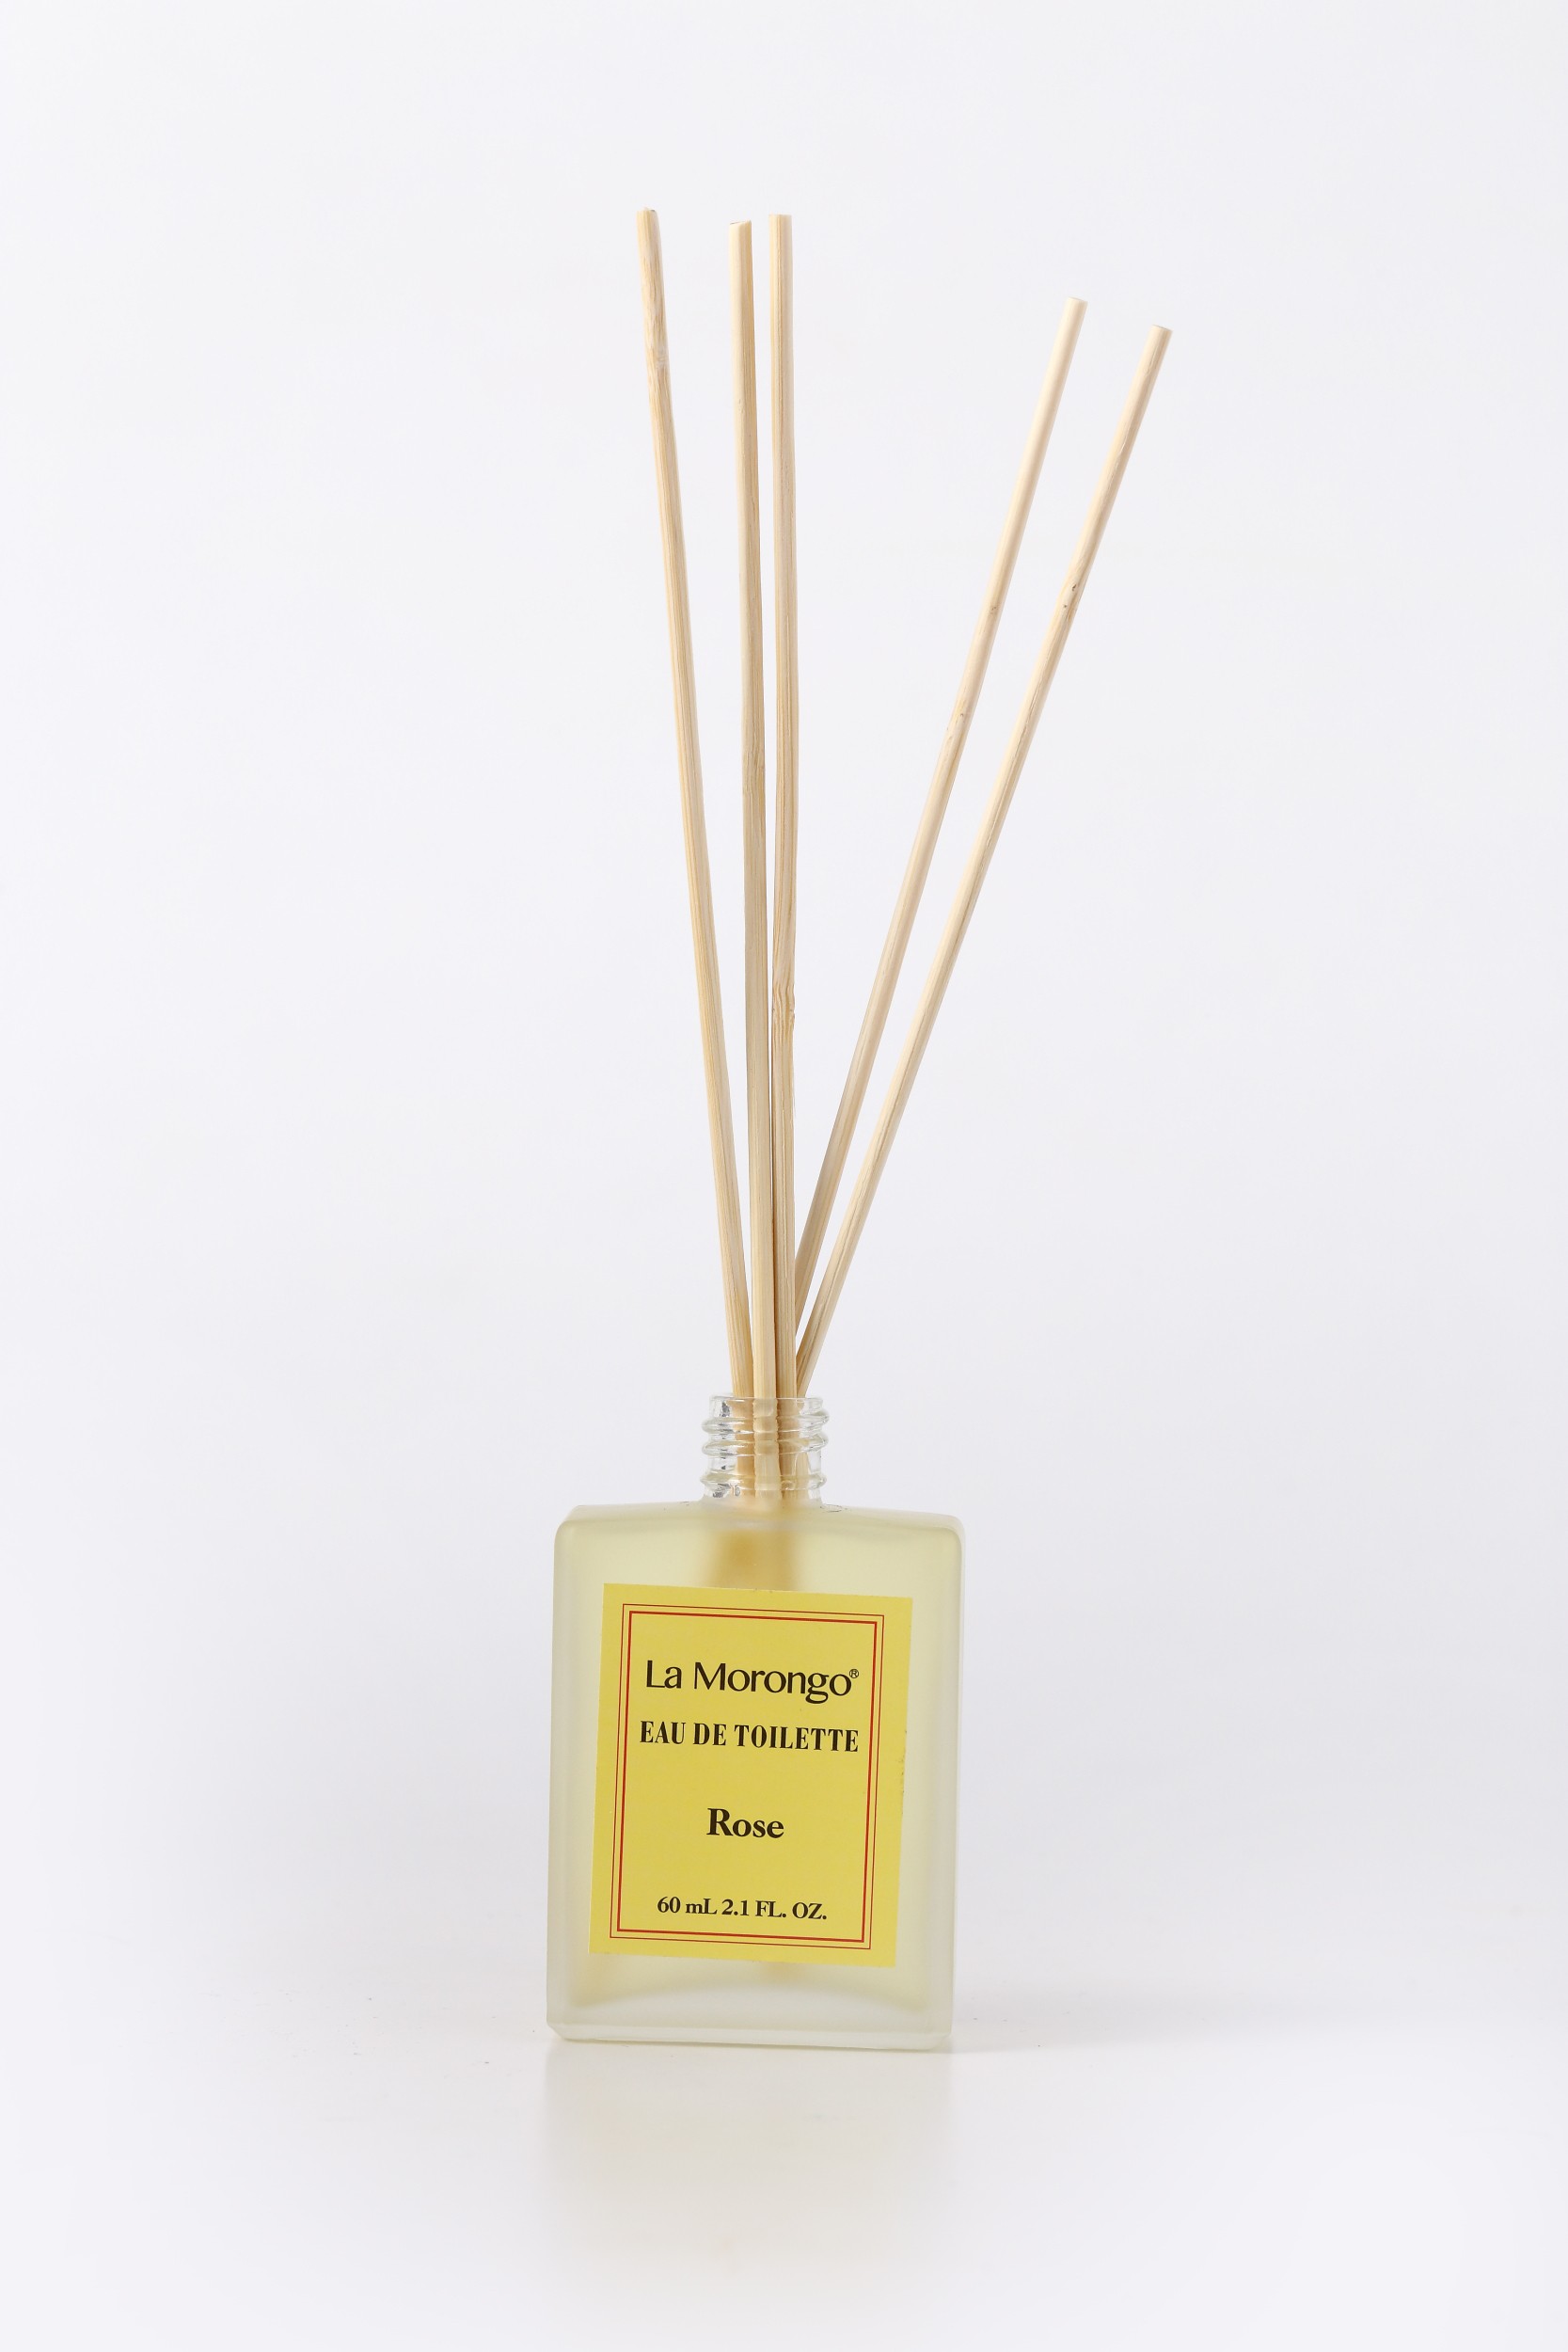 (法國樂木美品) Rose Reed diffuser黃標玫瑰經典香氛噴霧擴香竹 60mL 一瓶Classic Fragrance Spray,Gentle Scent,Nature,Relax